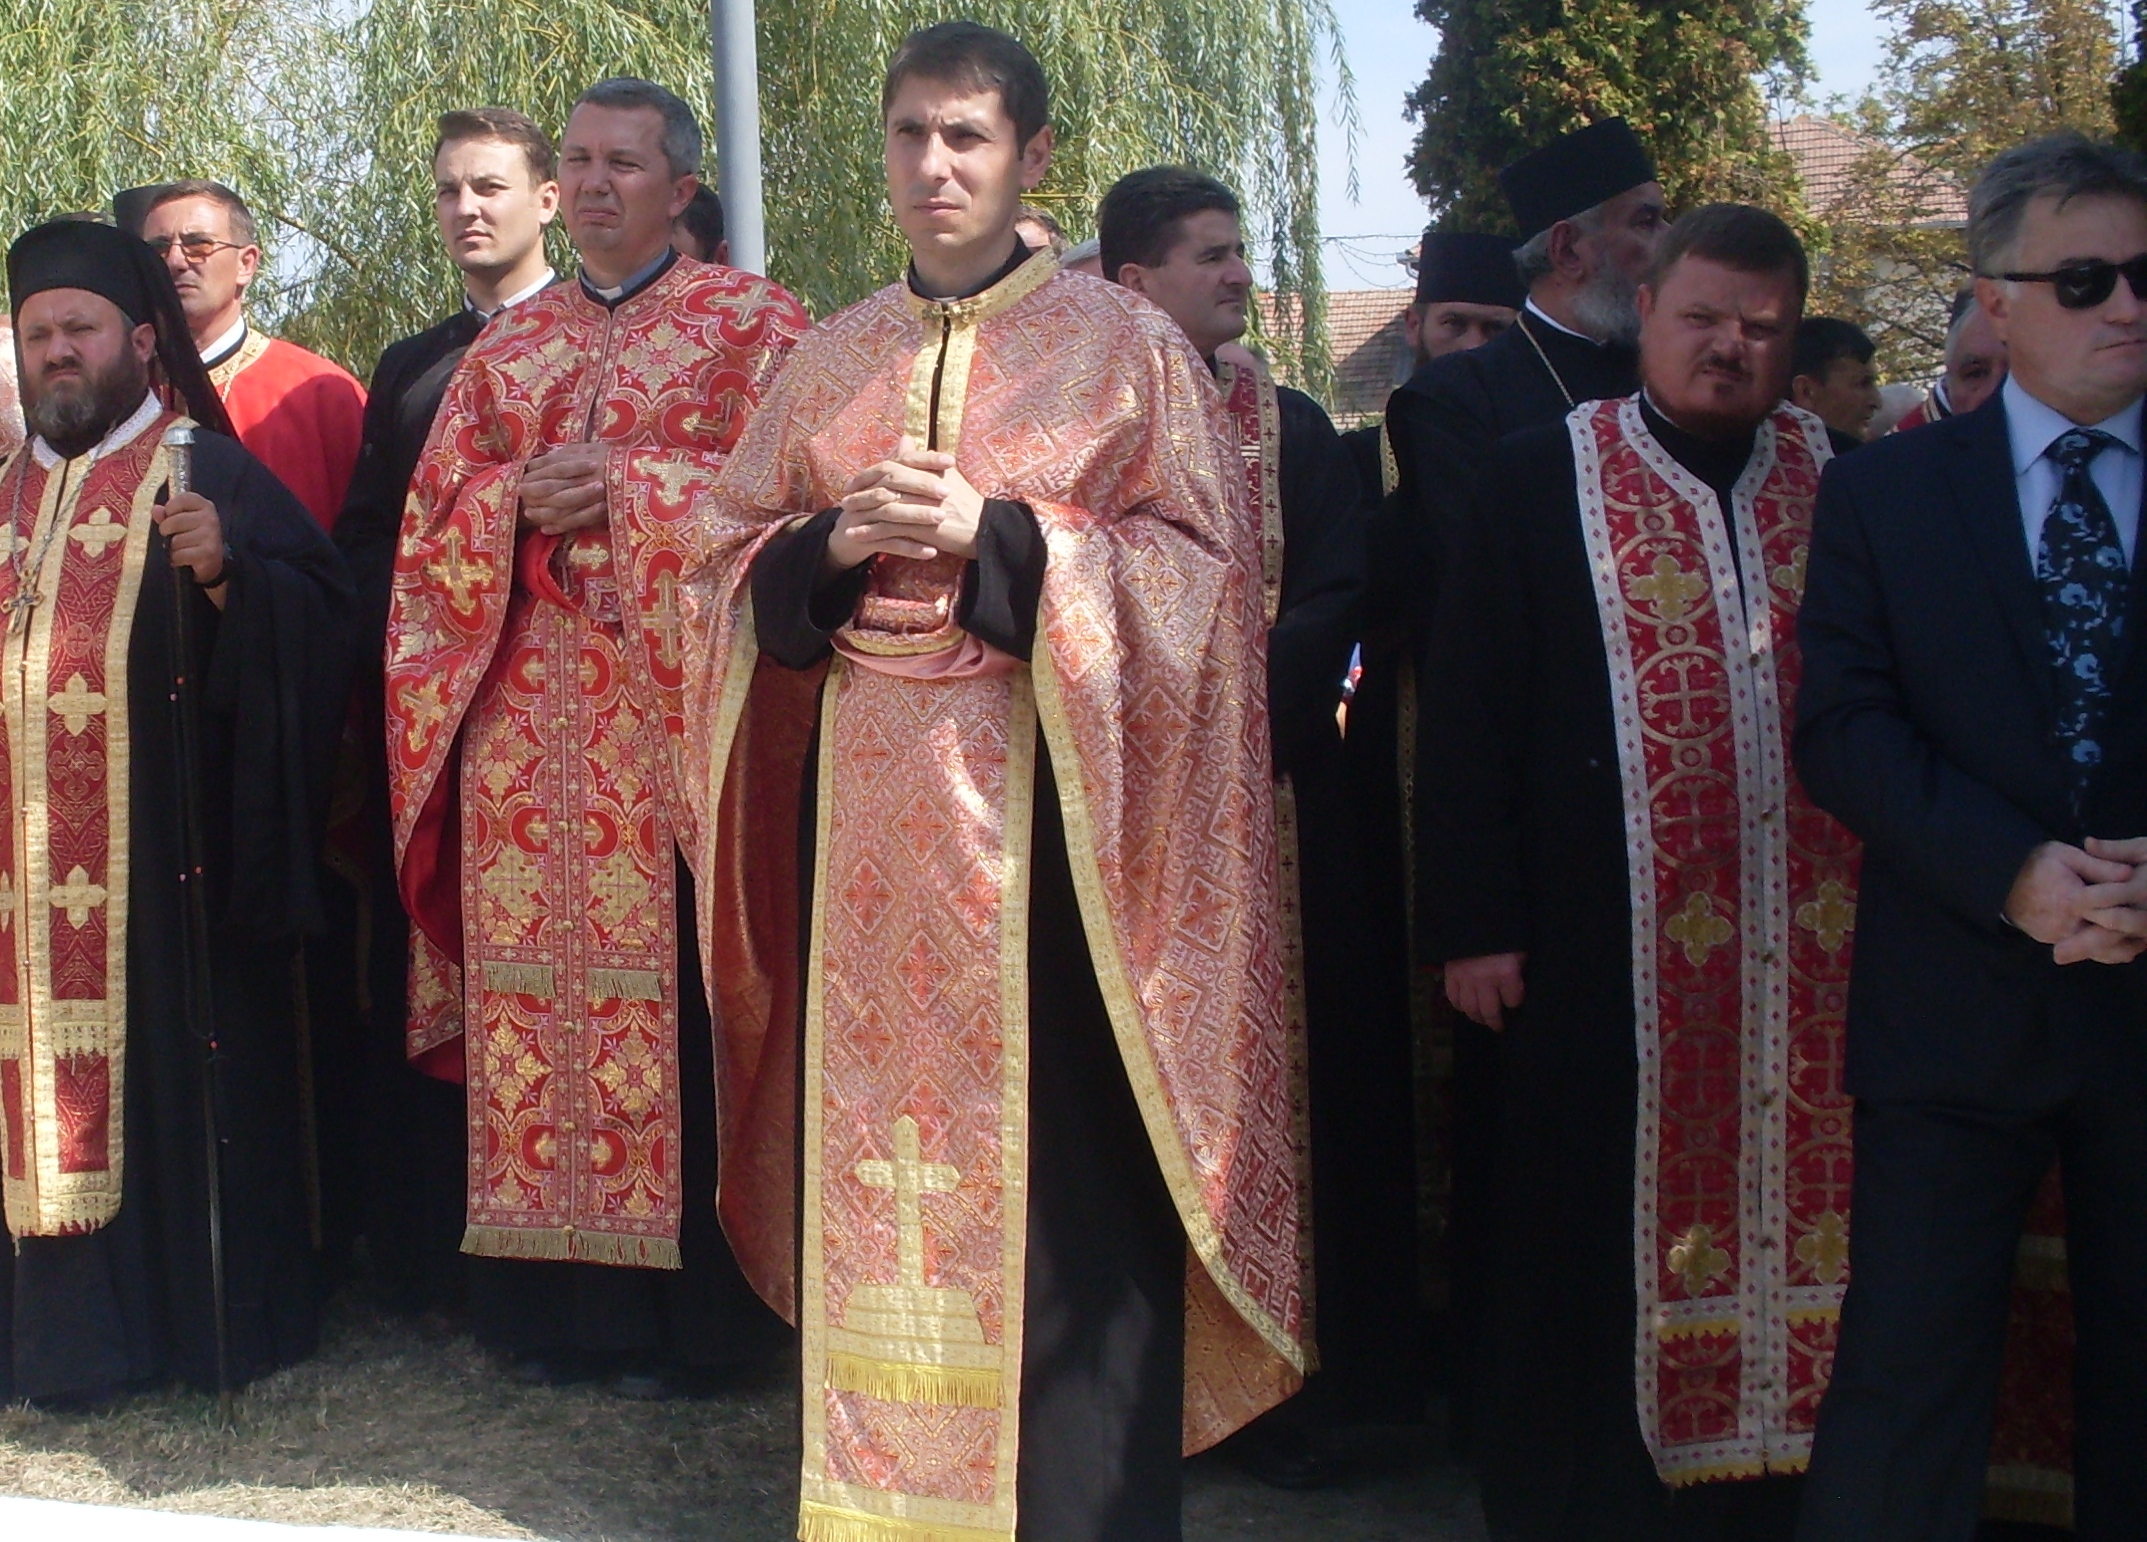 Sobor de preoţi la comemorarea din 2012